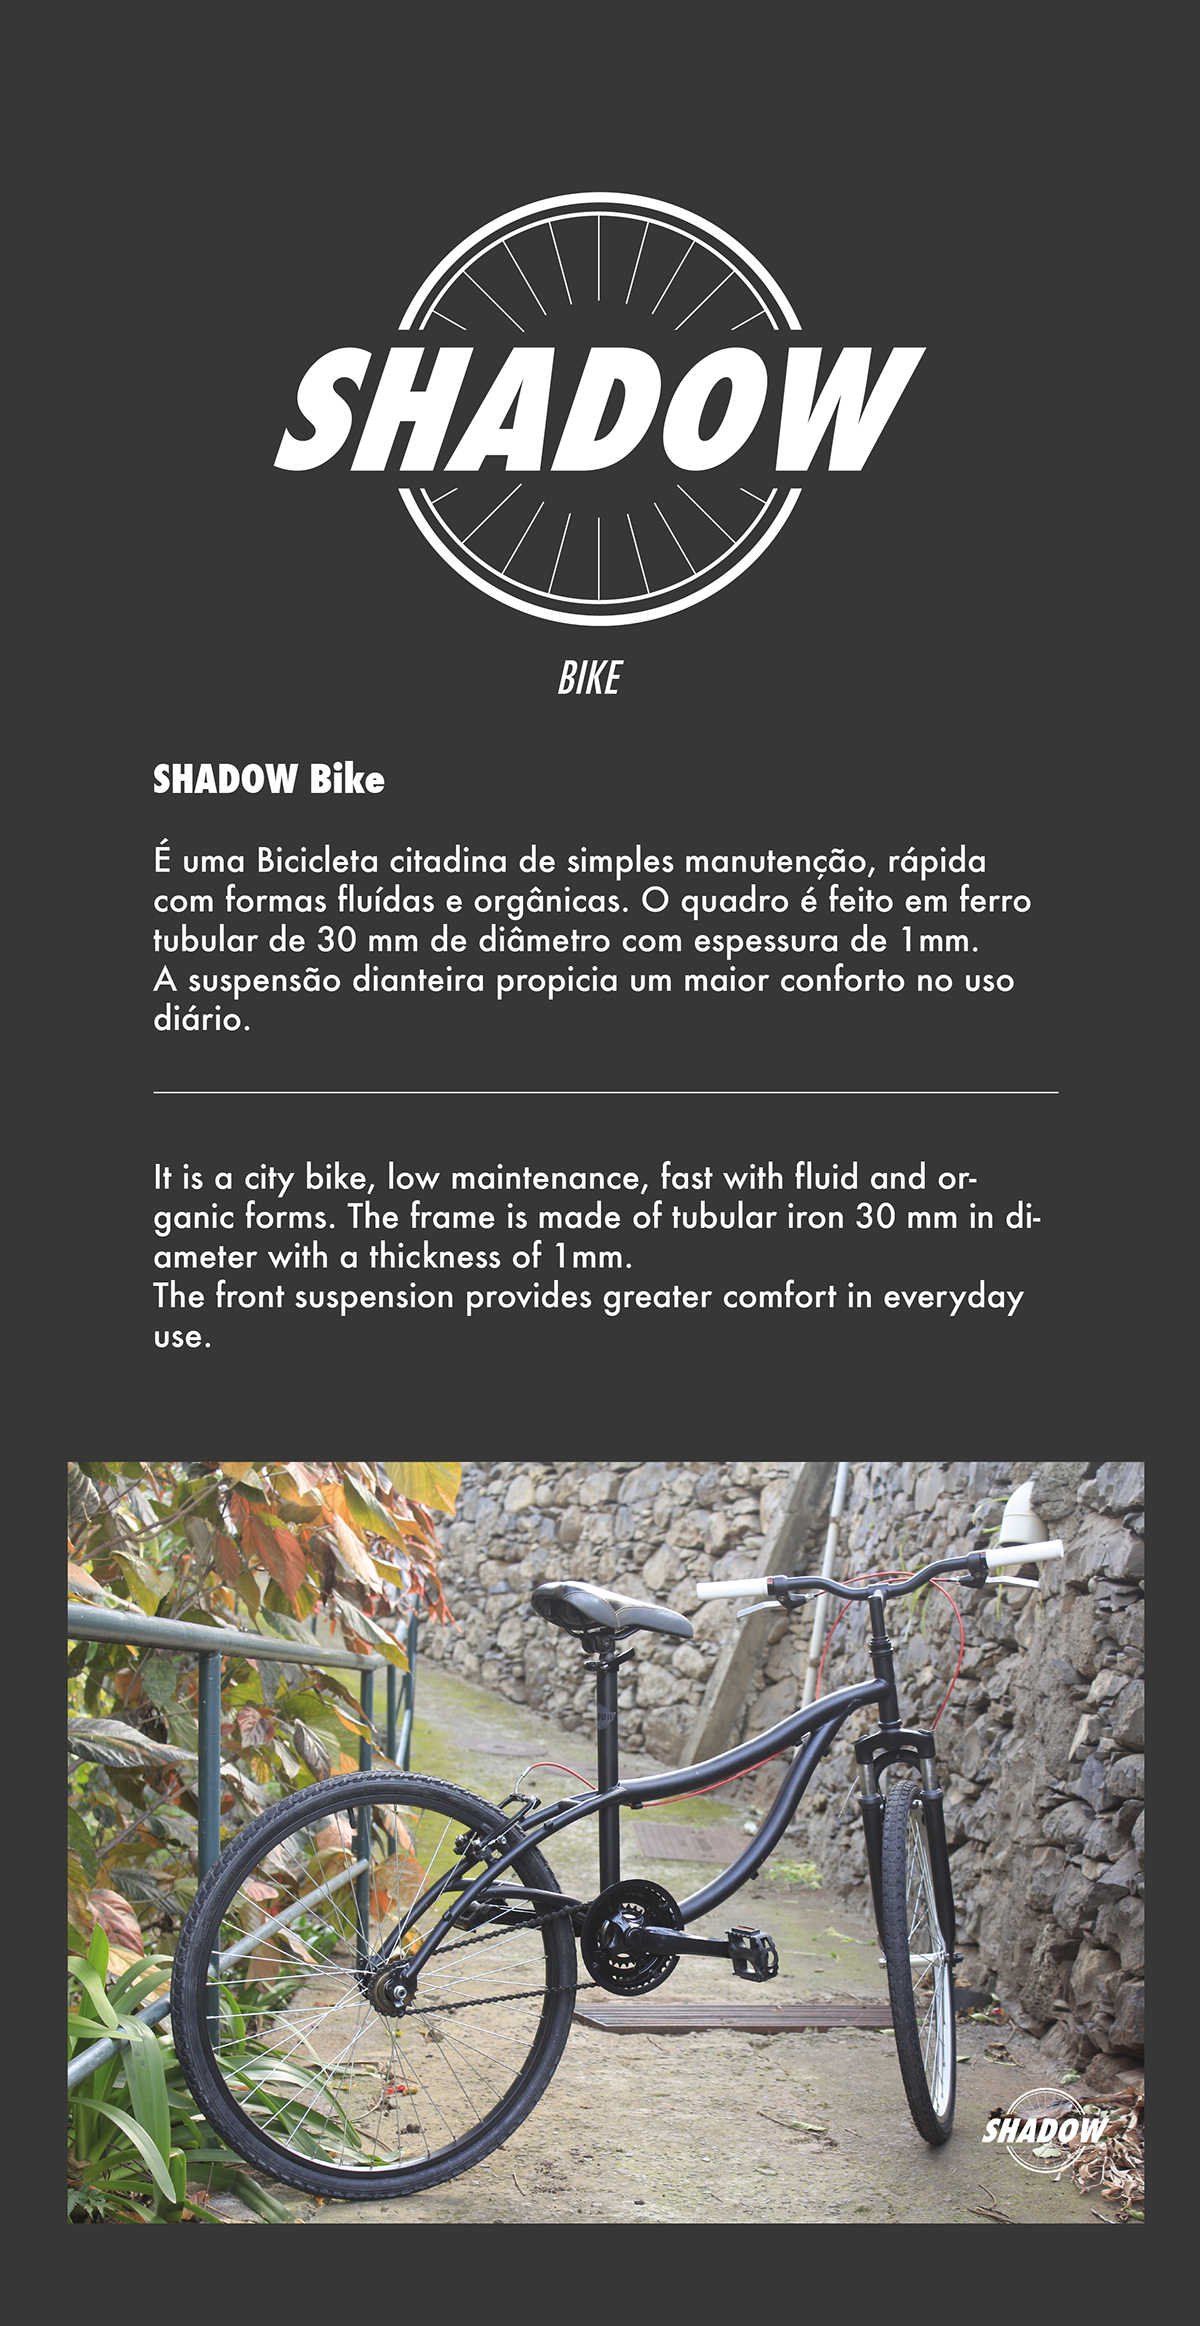 Bike bibicleta design produto designdeproduto  Madeira universidadedamadeira Urban urbana urbanbike bicicletaurbana shadow shadowbike